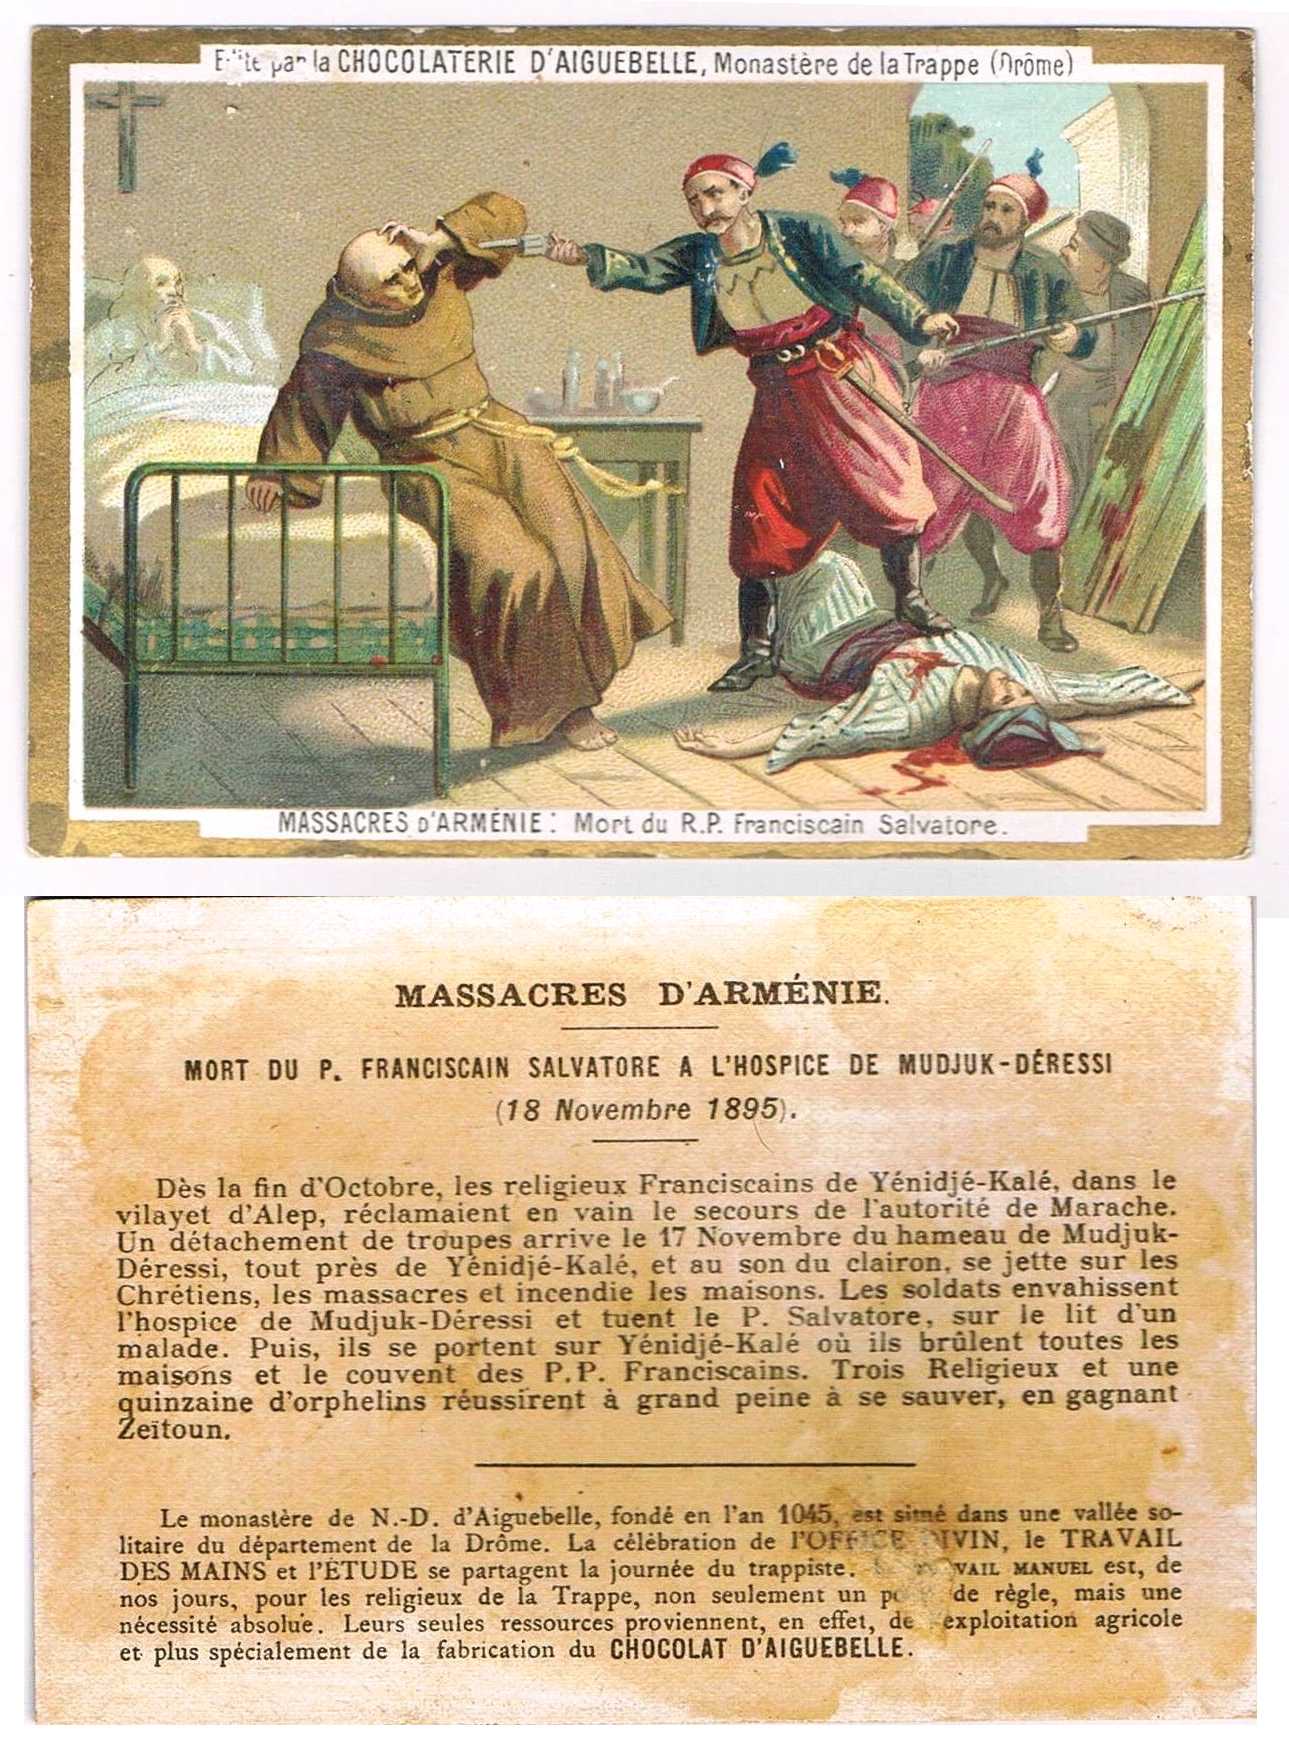 1895 Massacre d'Armenie, Chromo, Chocolaterie d'Aiguebelle 18 11 1895